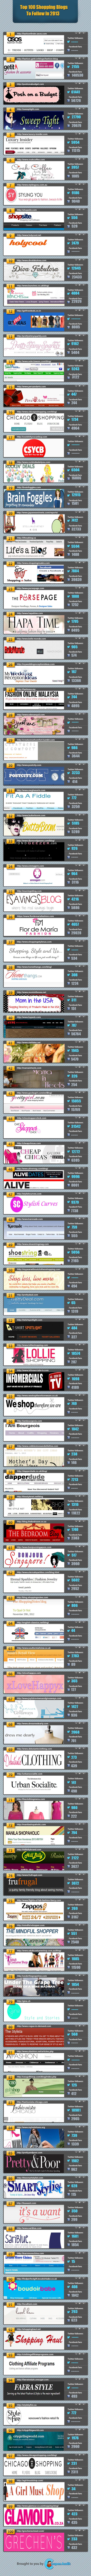 Top 100 Shopping blogs to follow